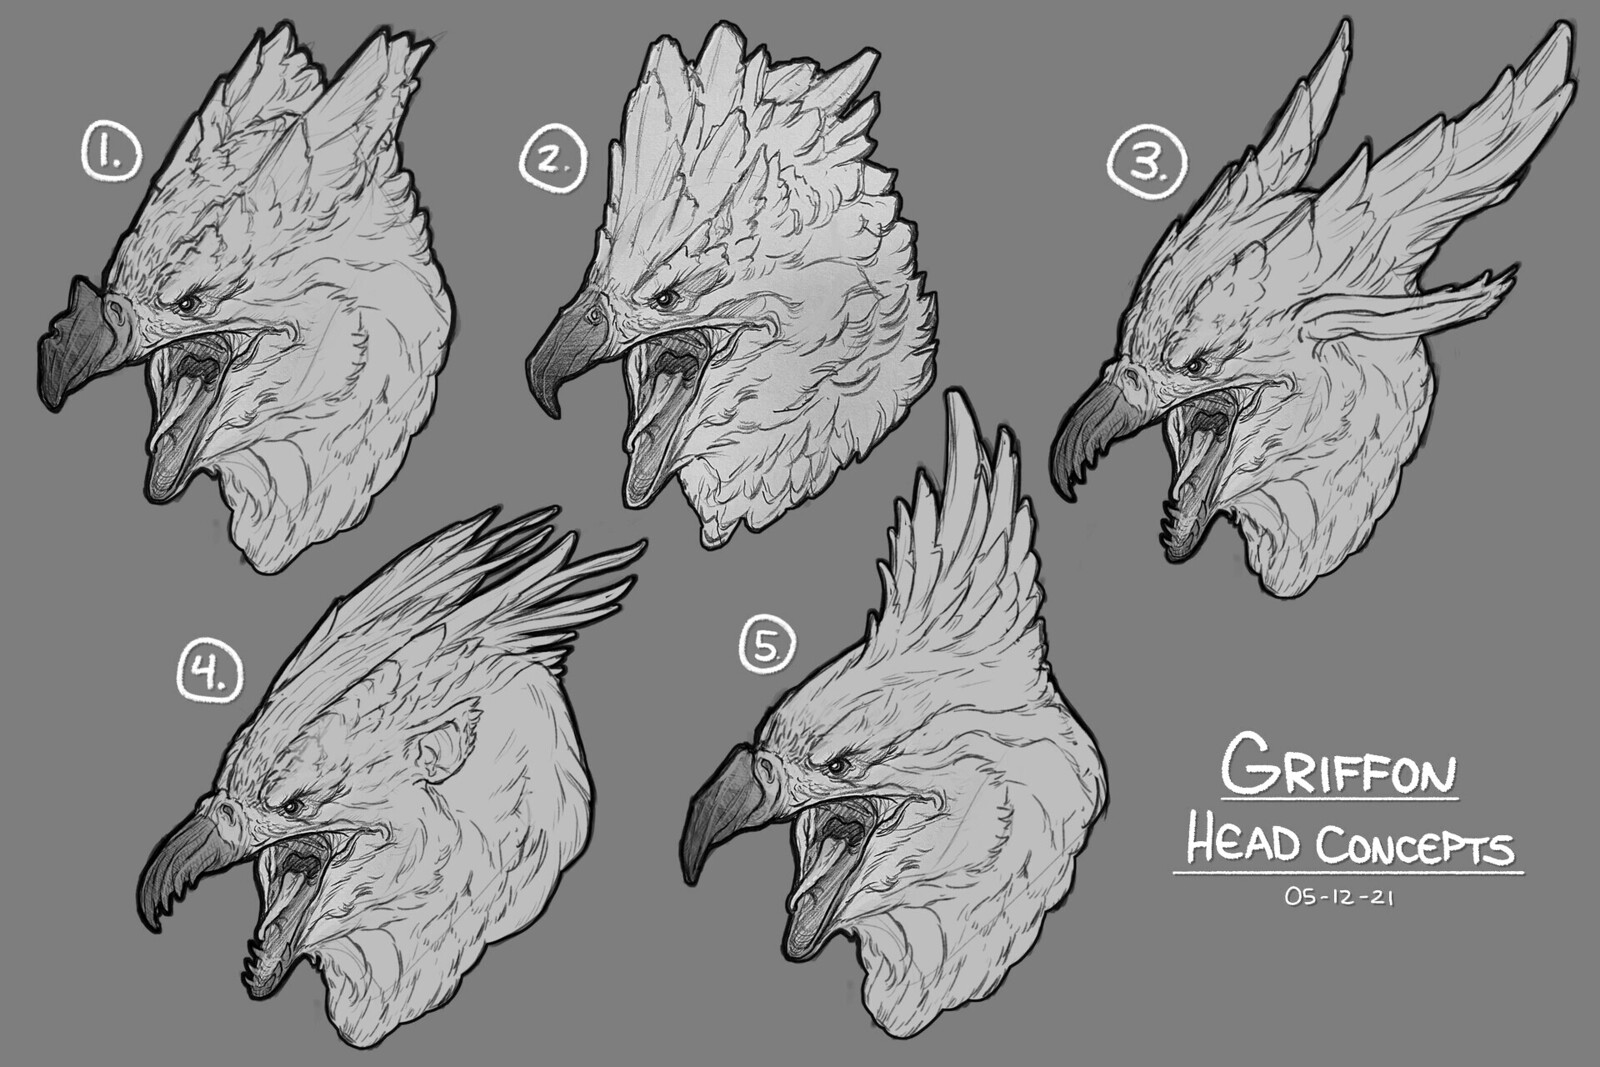 Griffin Head Concepts